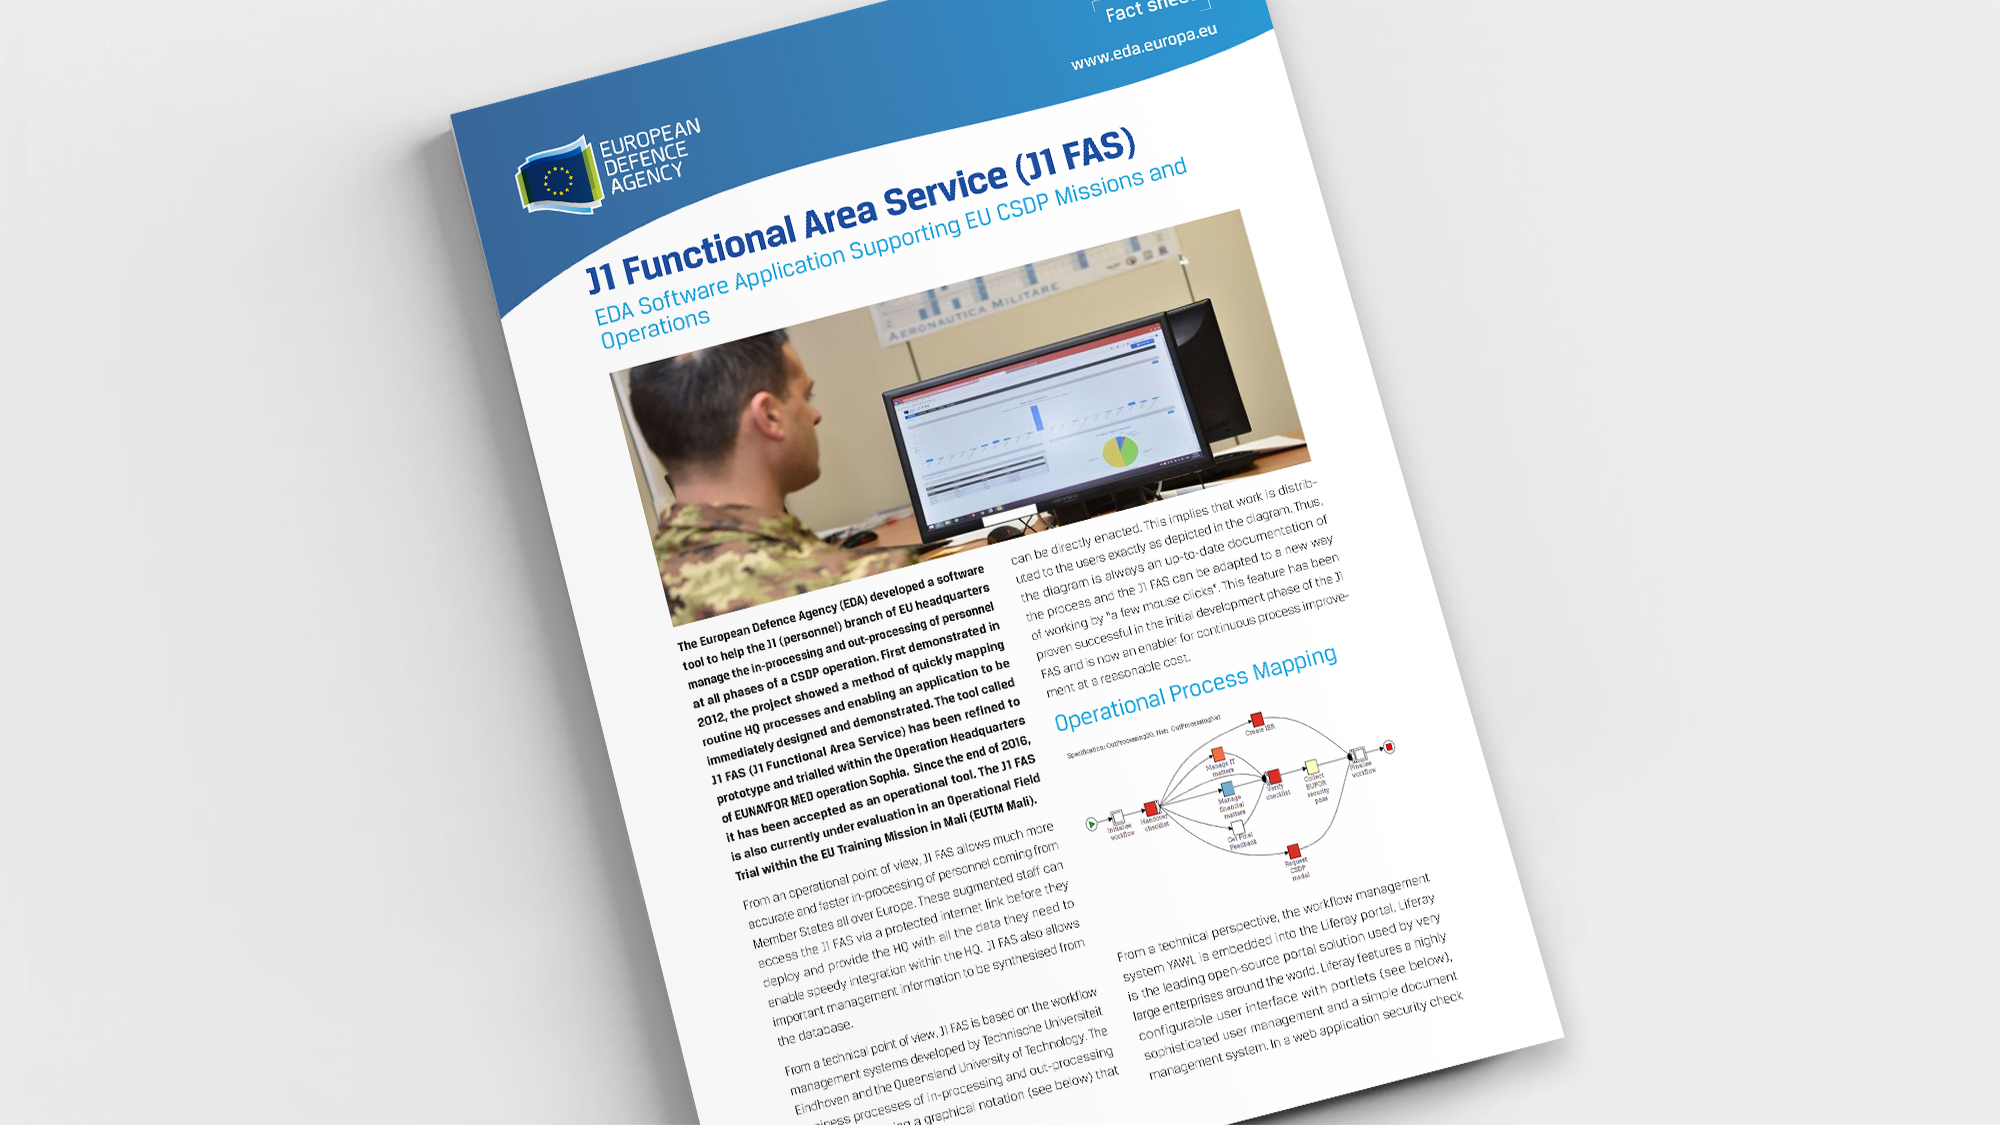 Factsheet J1 Functional Area Service (J1 FAS)